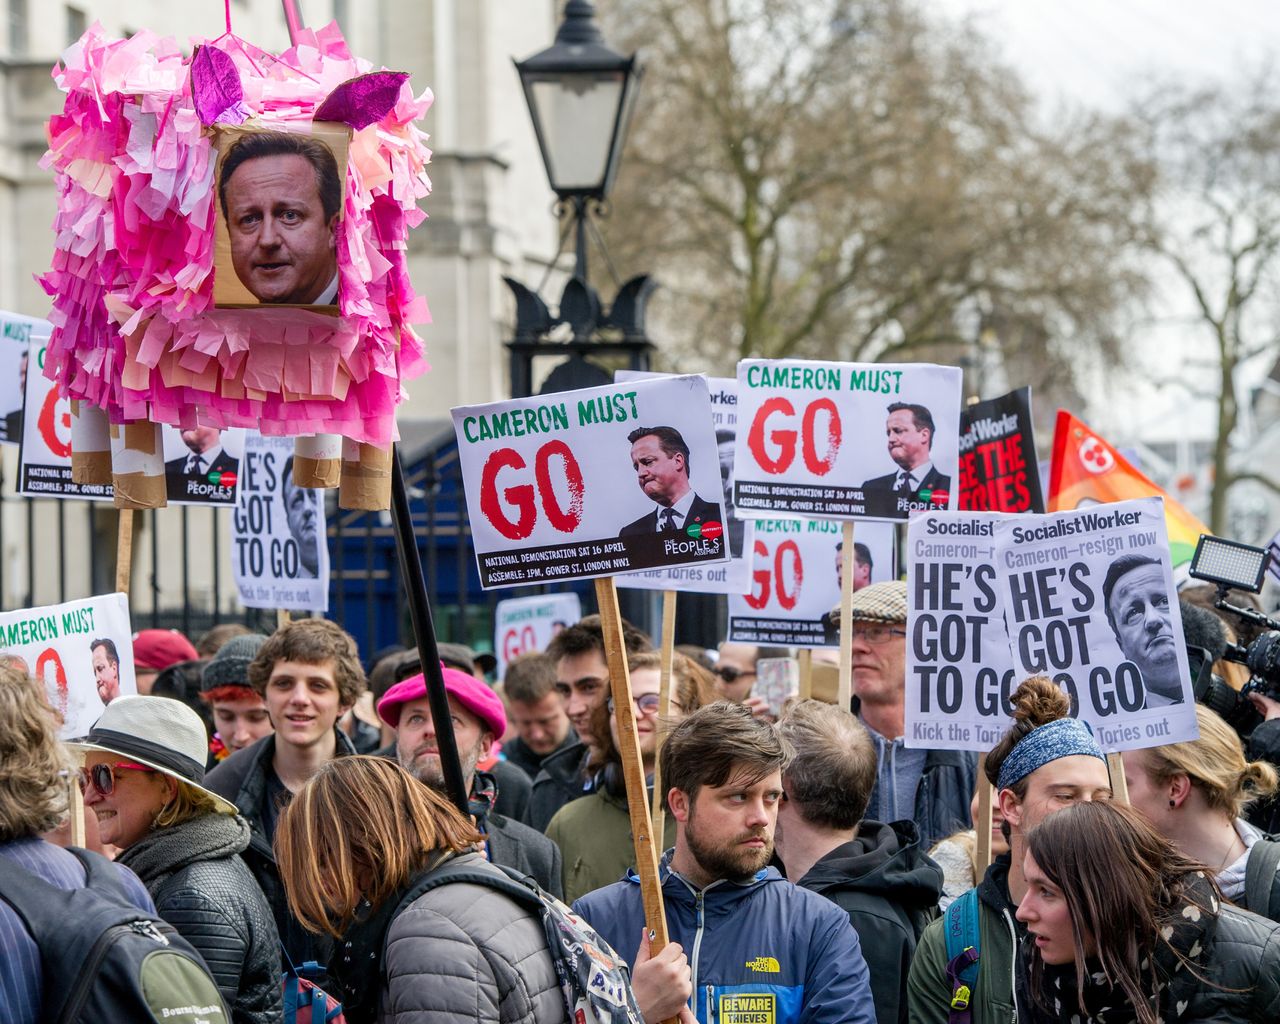 David Cameron's face adorns a pig piñata during Saturday's #resigncameron demo